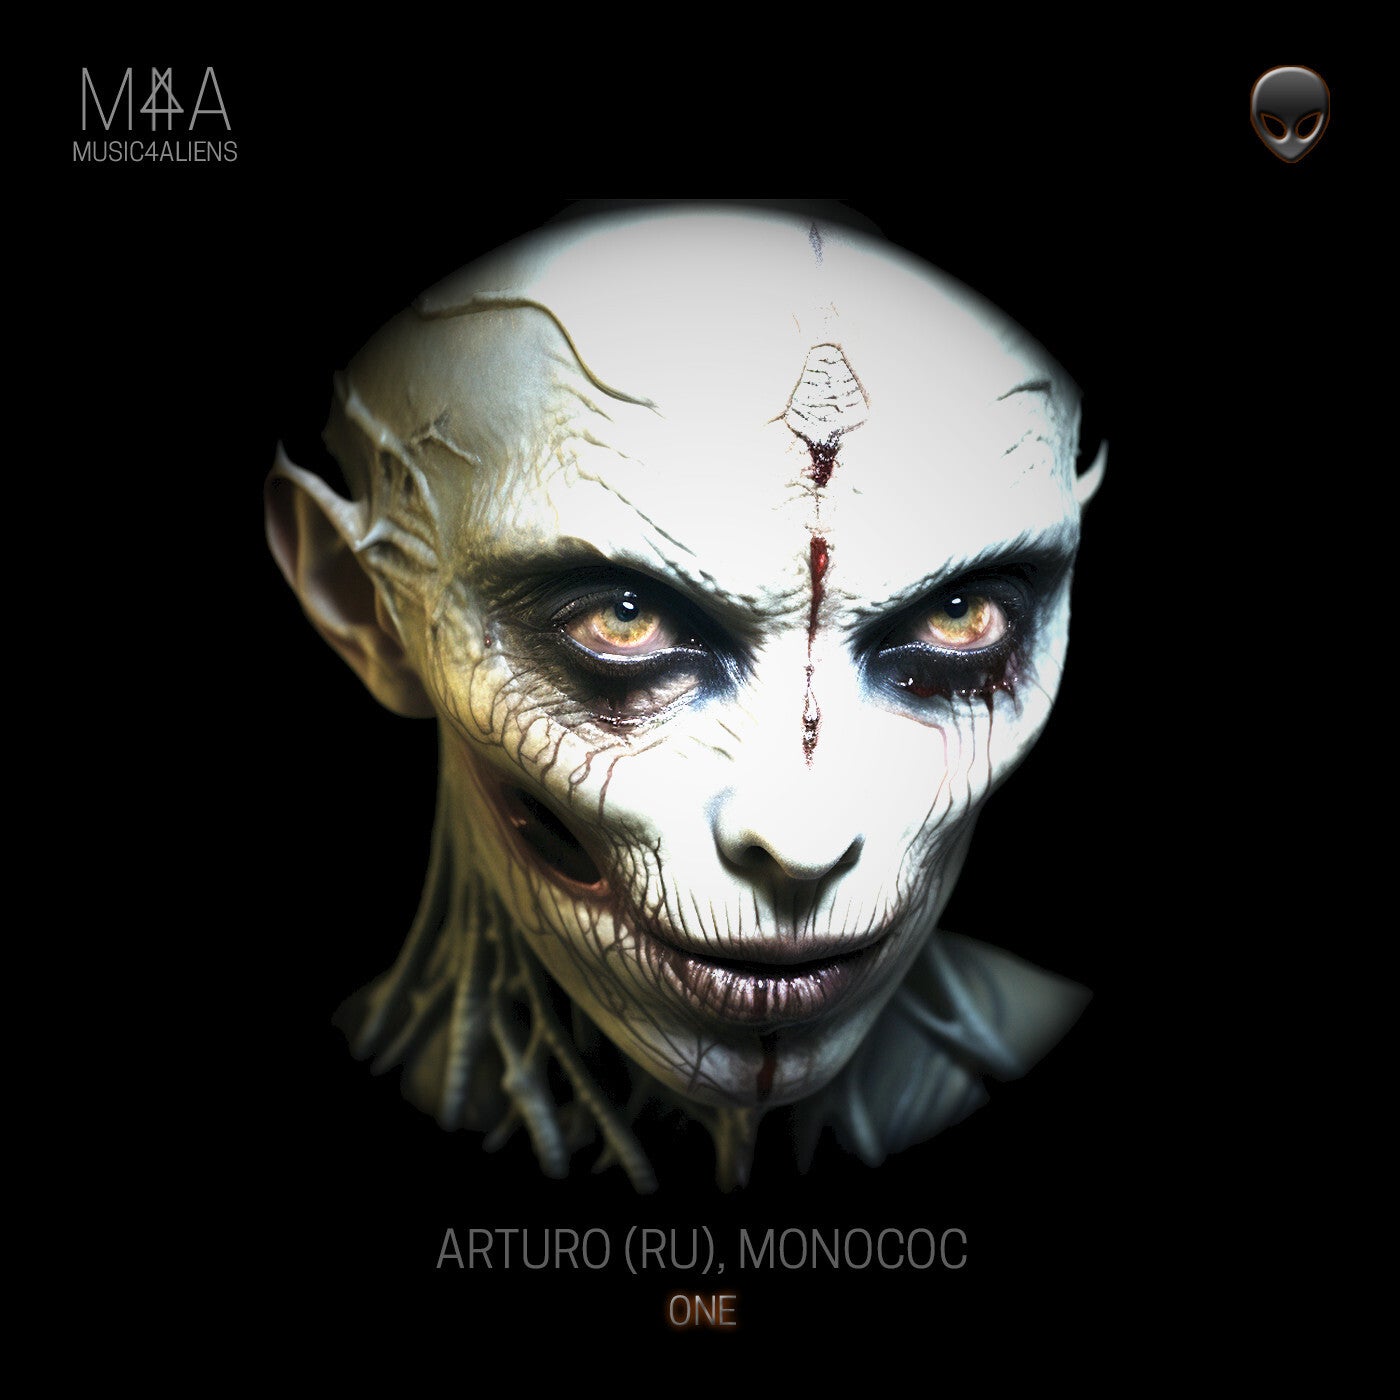 image cover: Monococ, Arturo (RU) - One on Music4Aliens